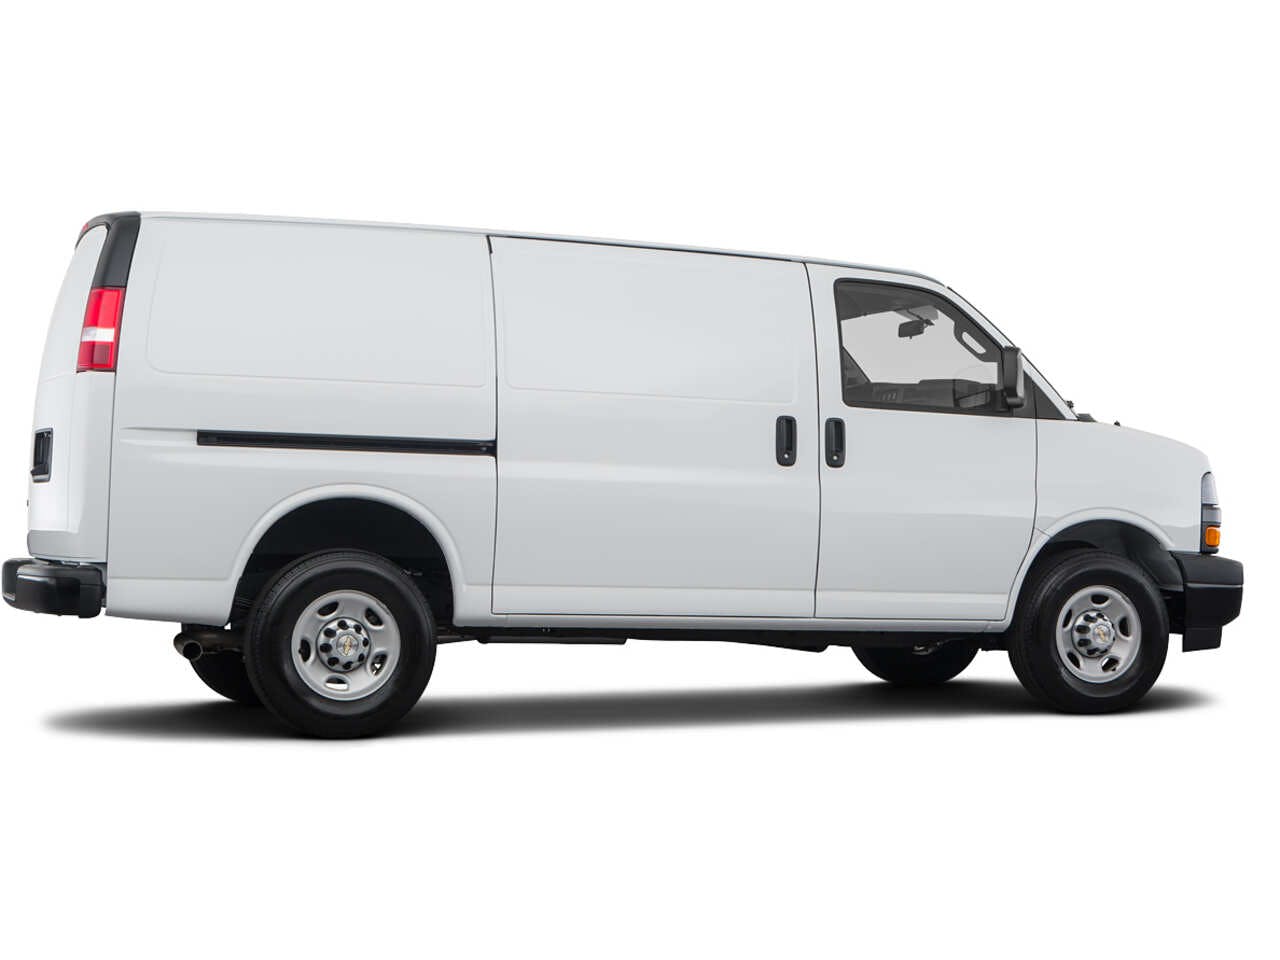 2021 Chevrolet Express Cargo Van Prices, Reviews, Trims Photos - TrueCar